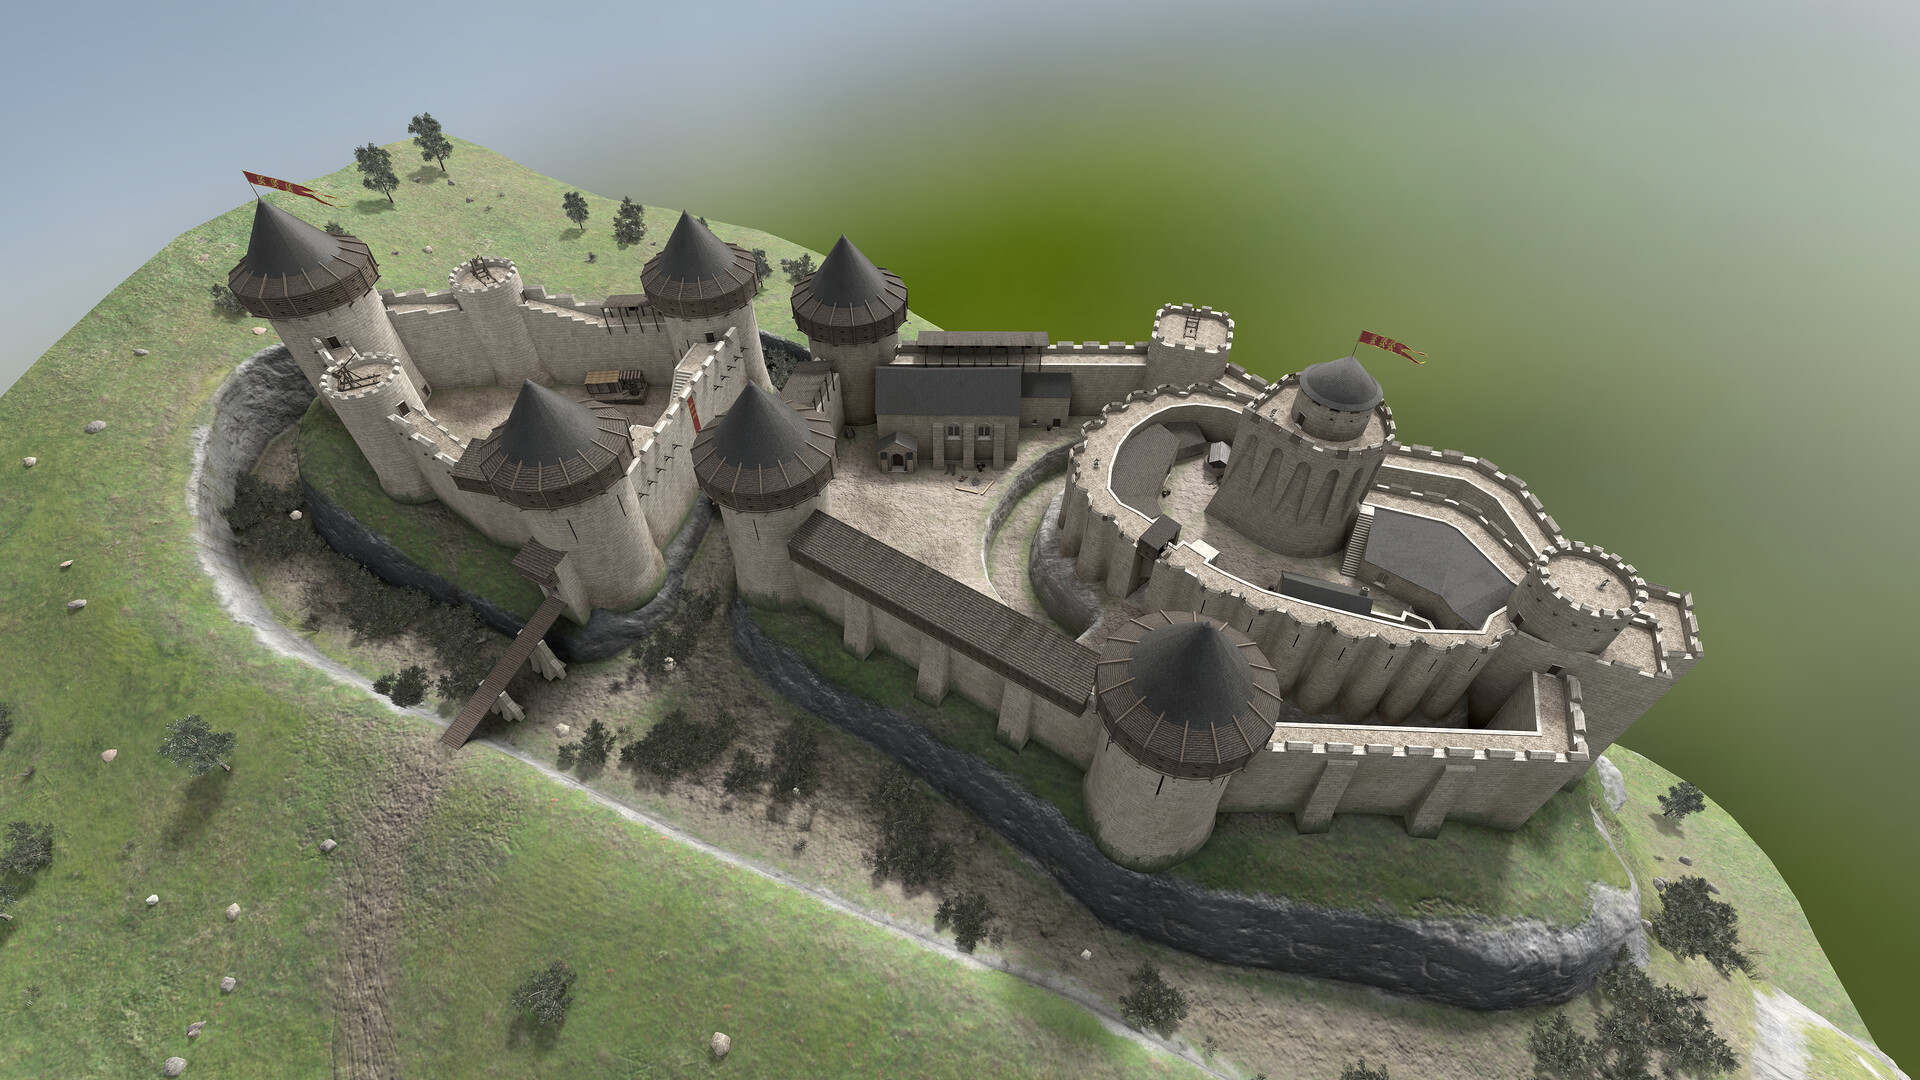 Реконструкция крепости. Крепость Шато Гайар. Шато-Гайар замок во Франции. Шато Гайар замок реконструкция. Шато Гайяр крепость реконструкция.